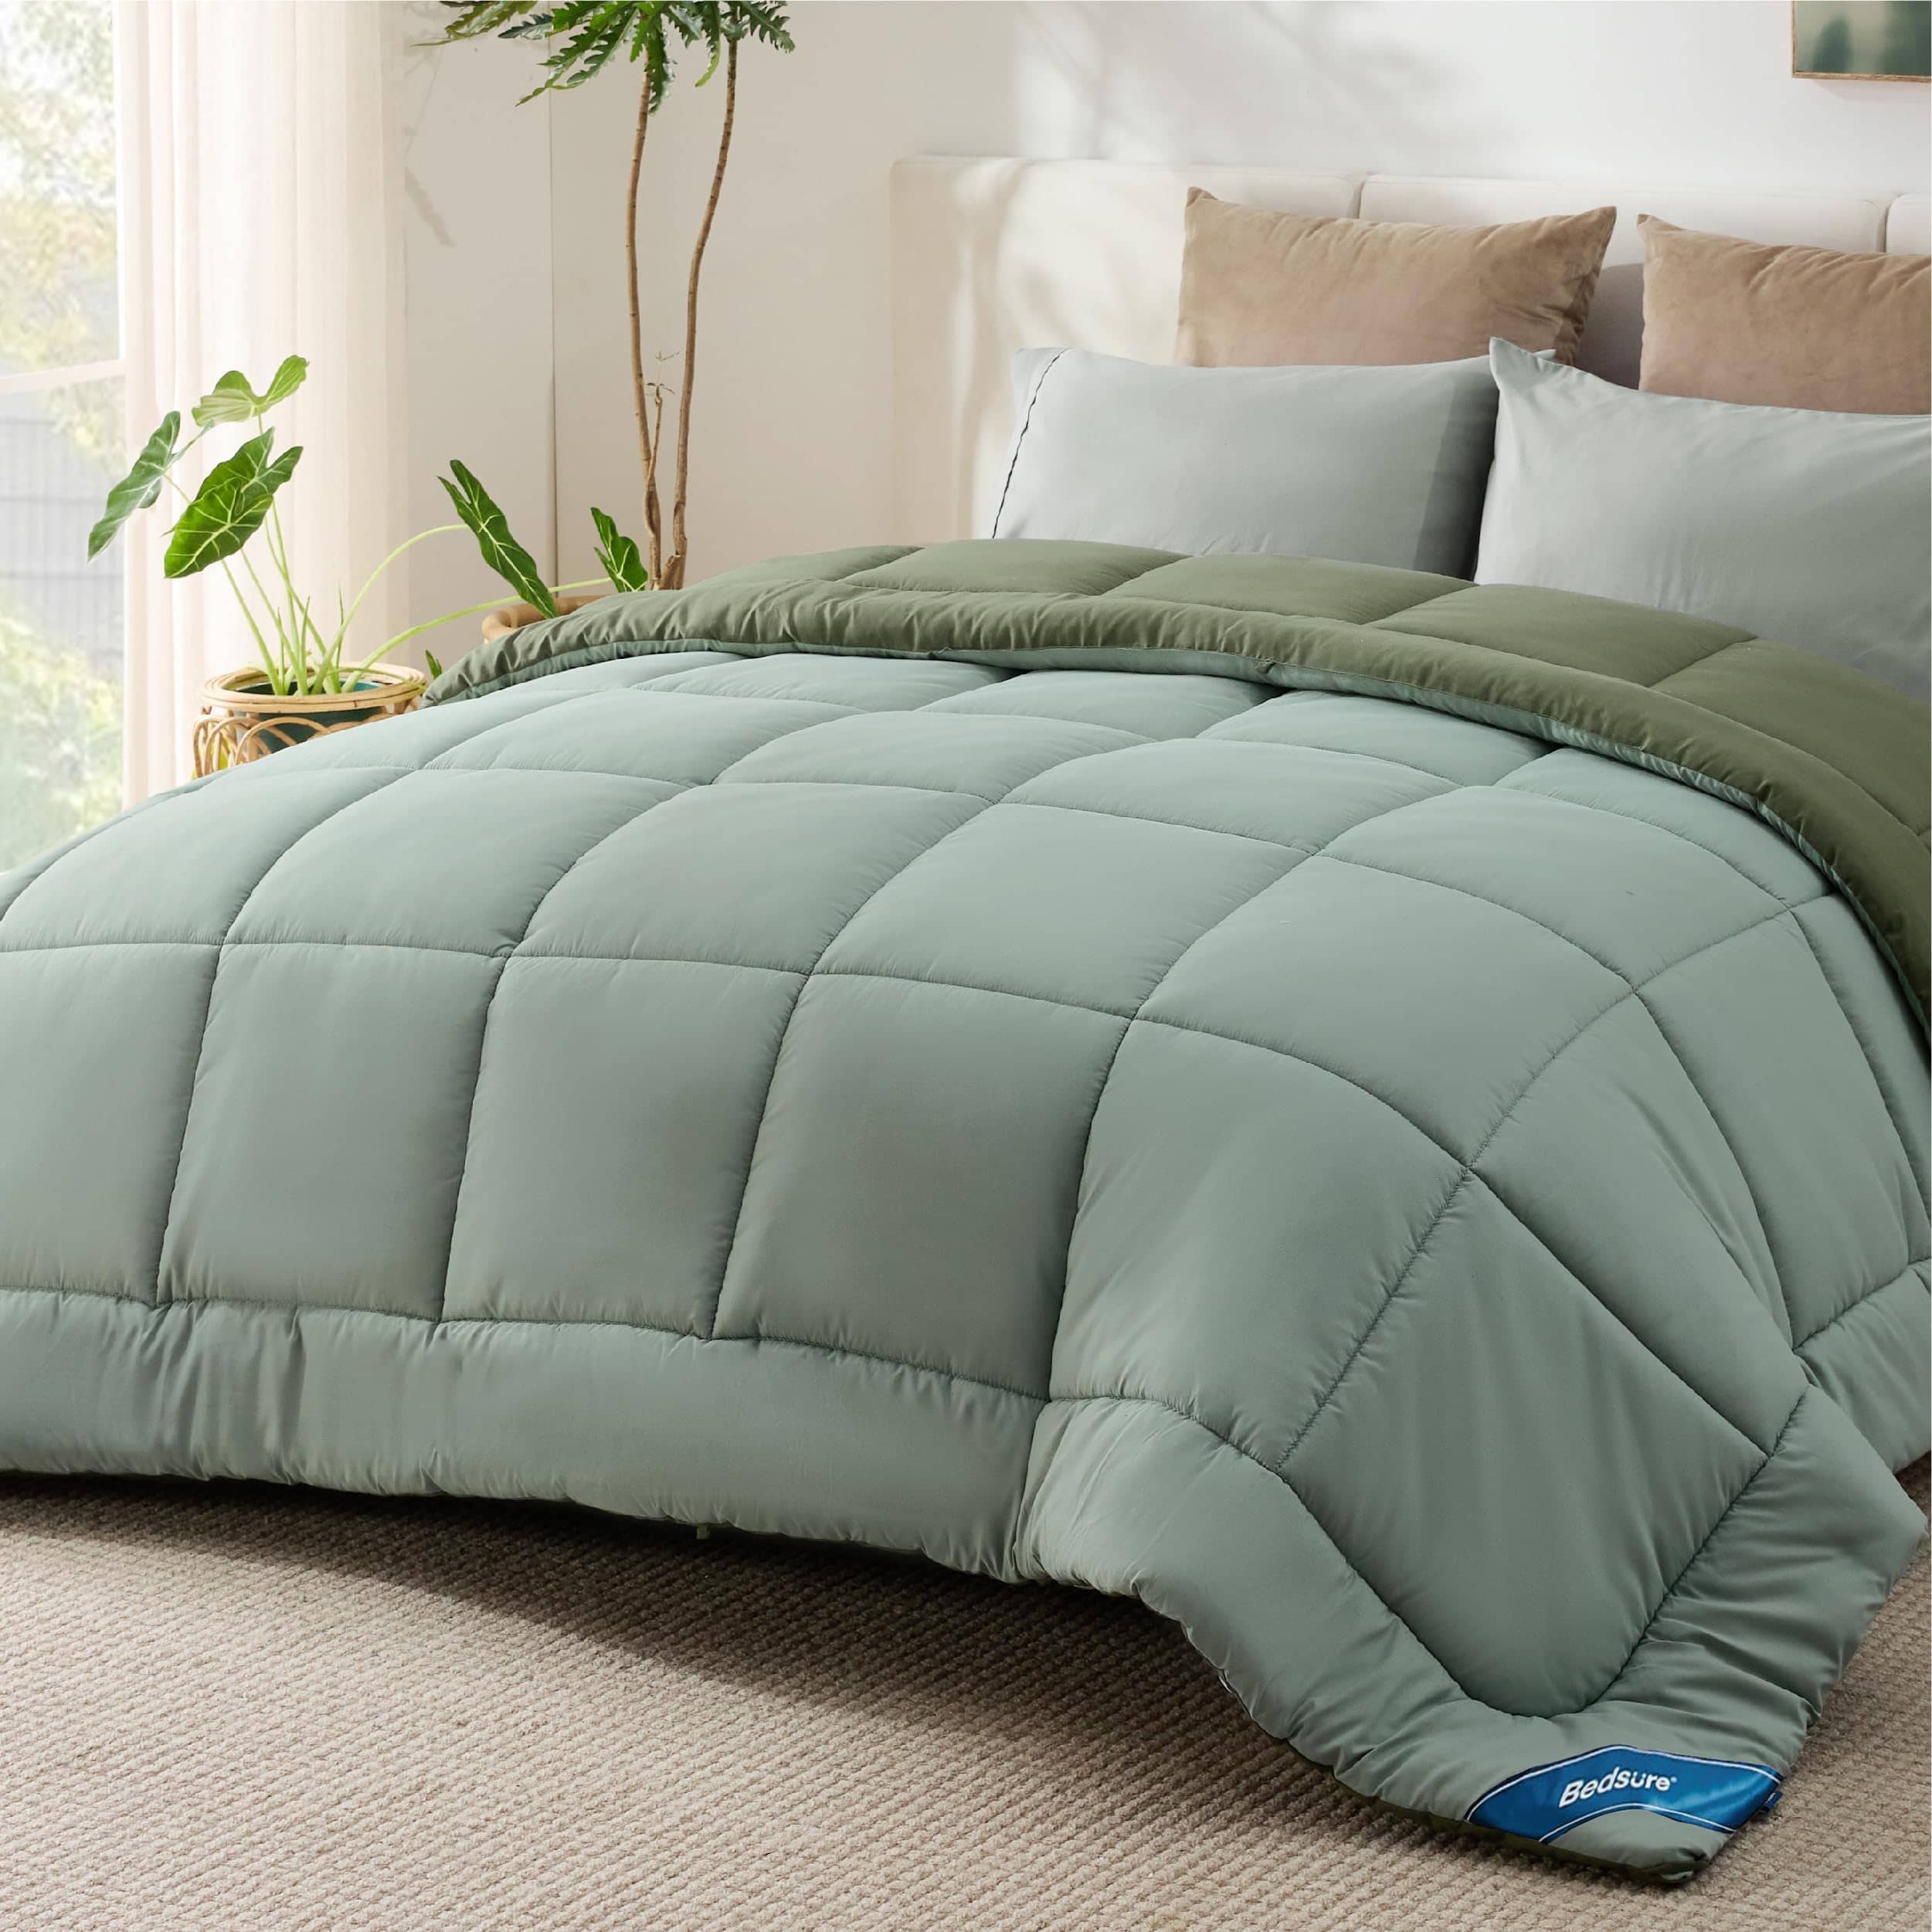 All-season Down Alternative Comforter Insert